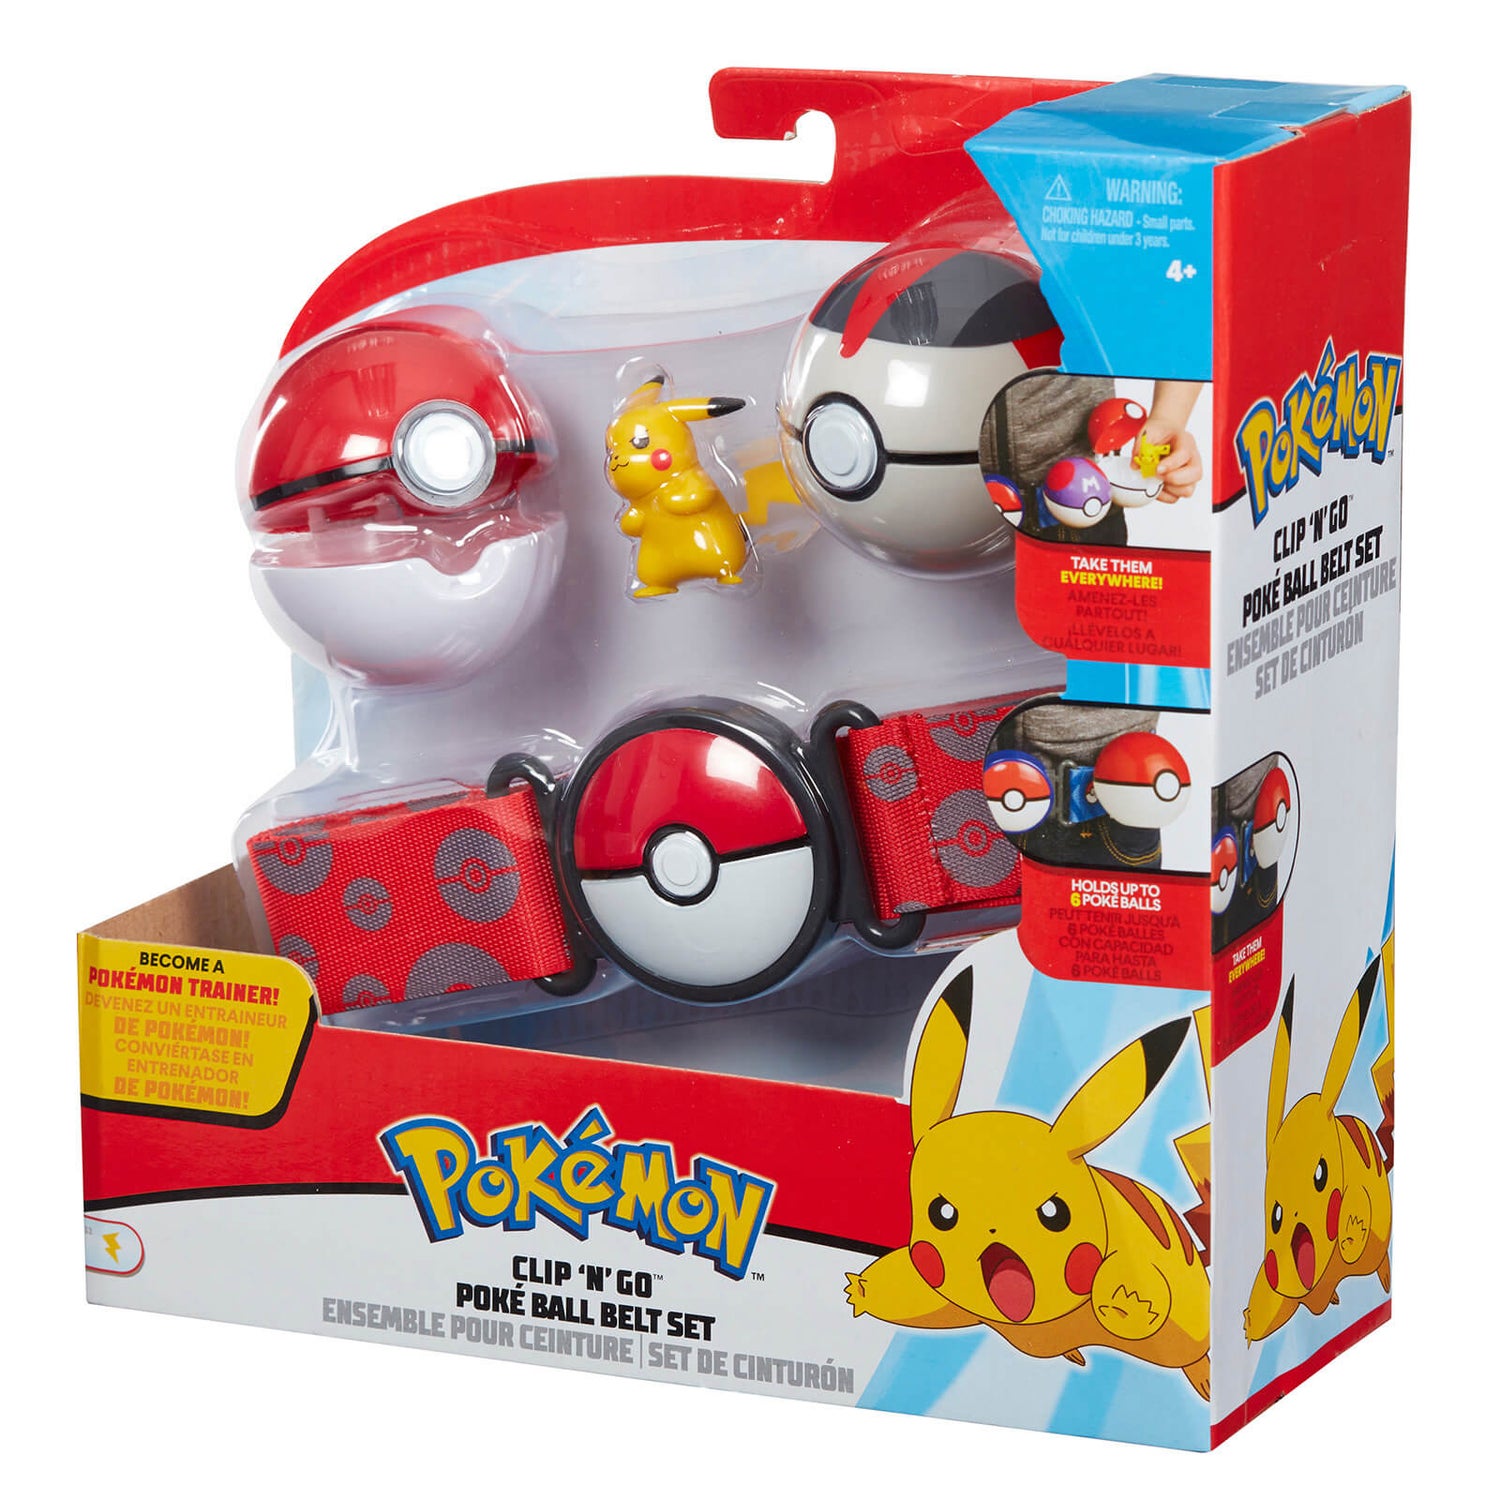 Pokémon Clip 'N' Go Pikachu Poke Ball Belt Set